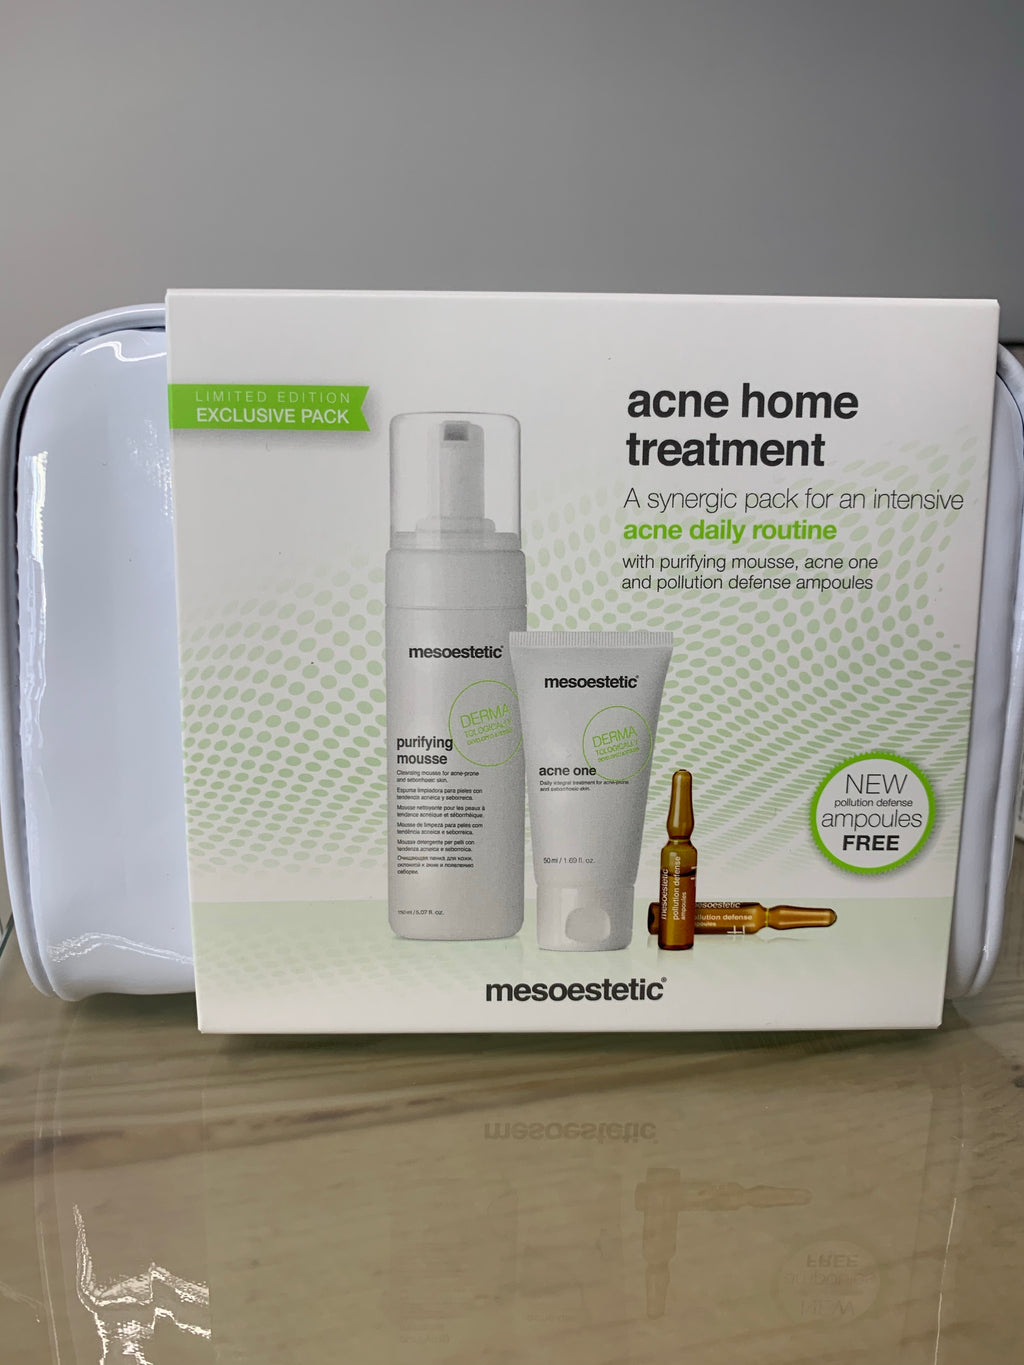 Acne home treatment